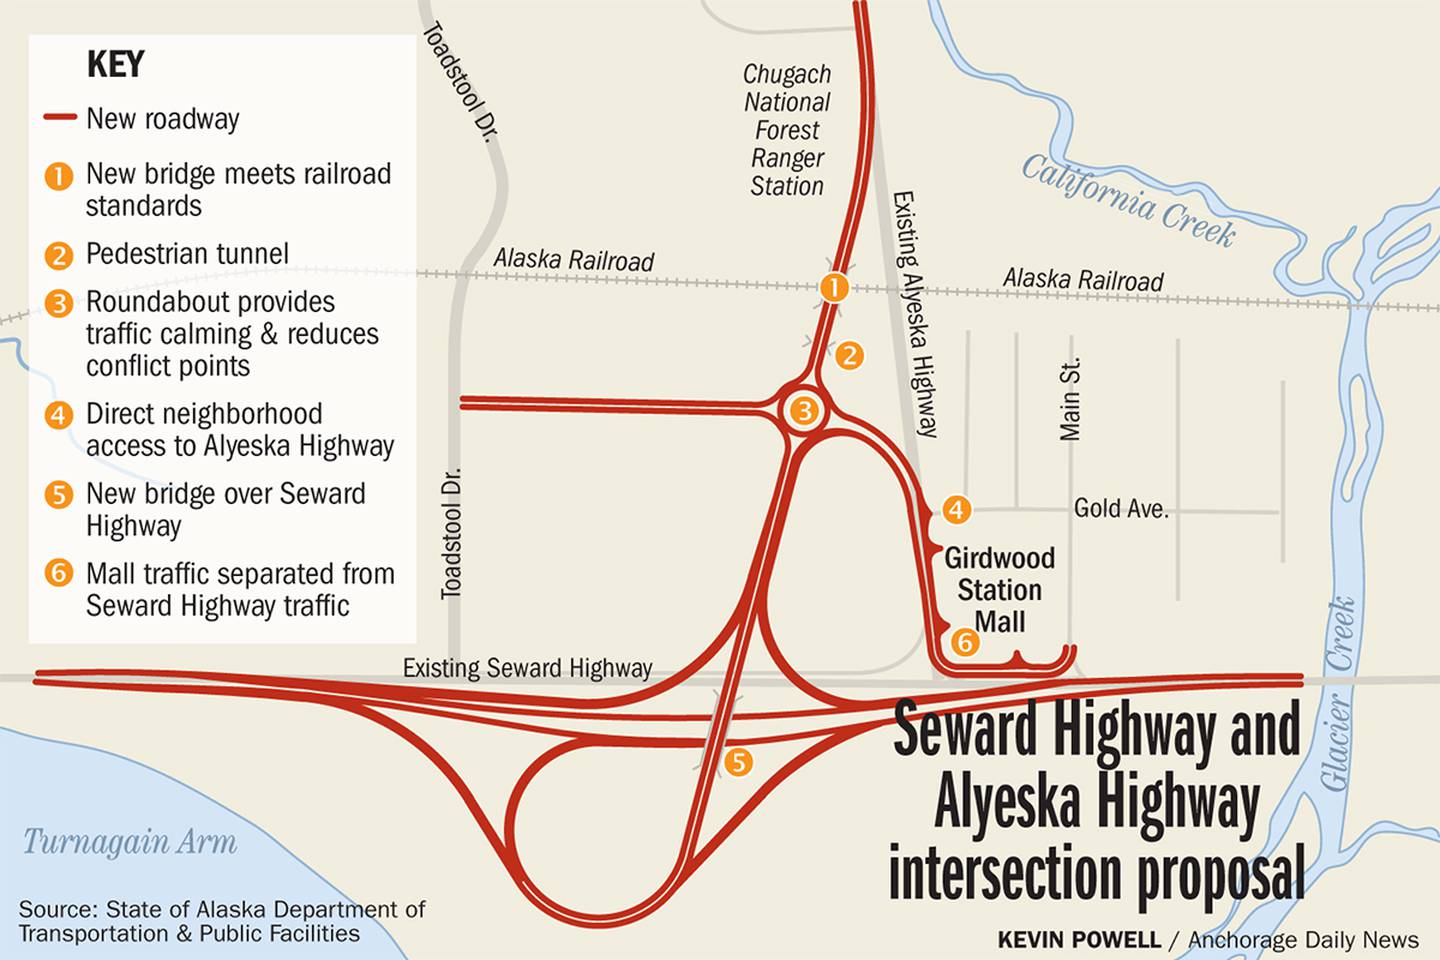 Seward Highway and Alyeska Highway intersection proposal